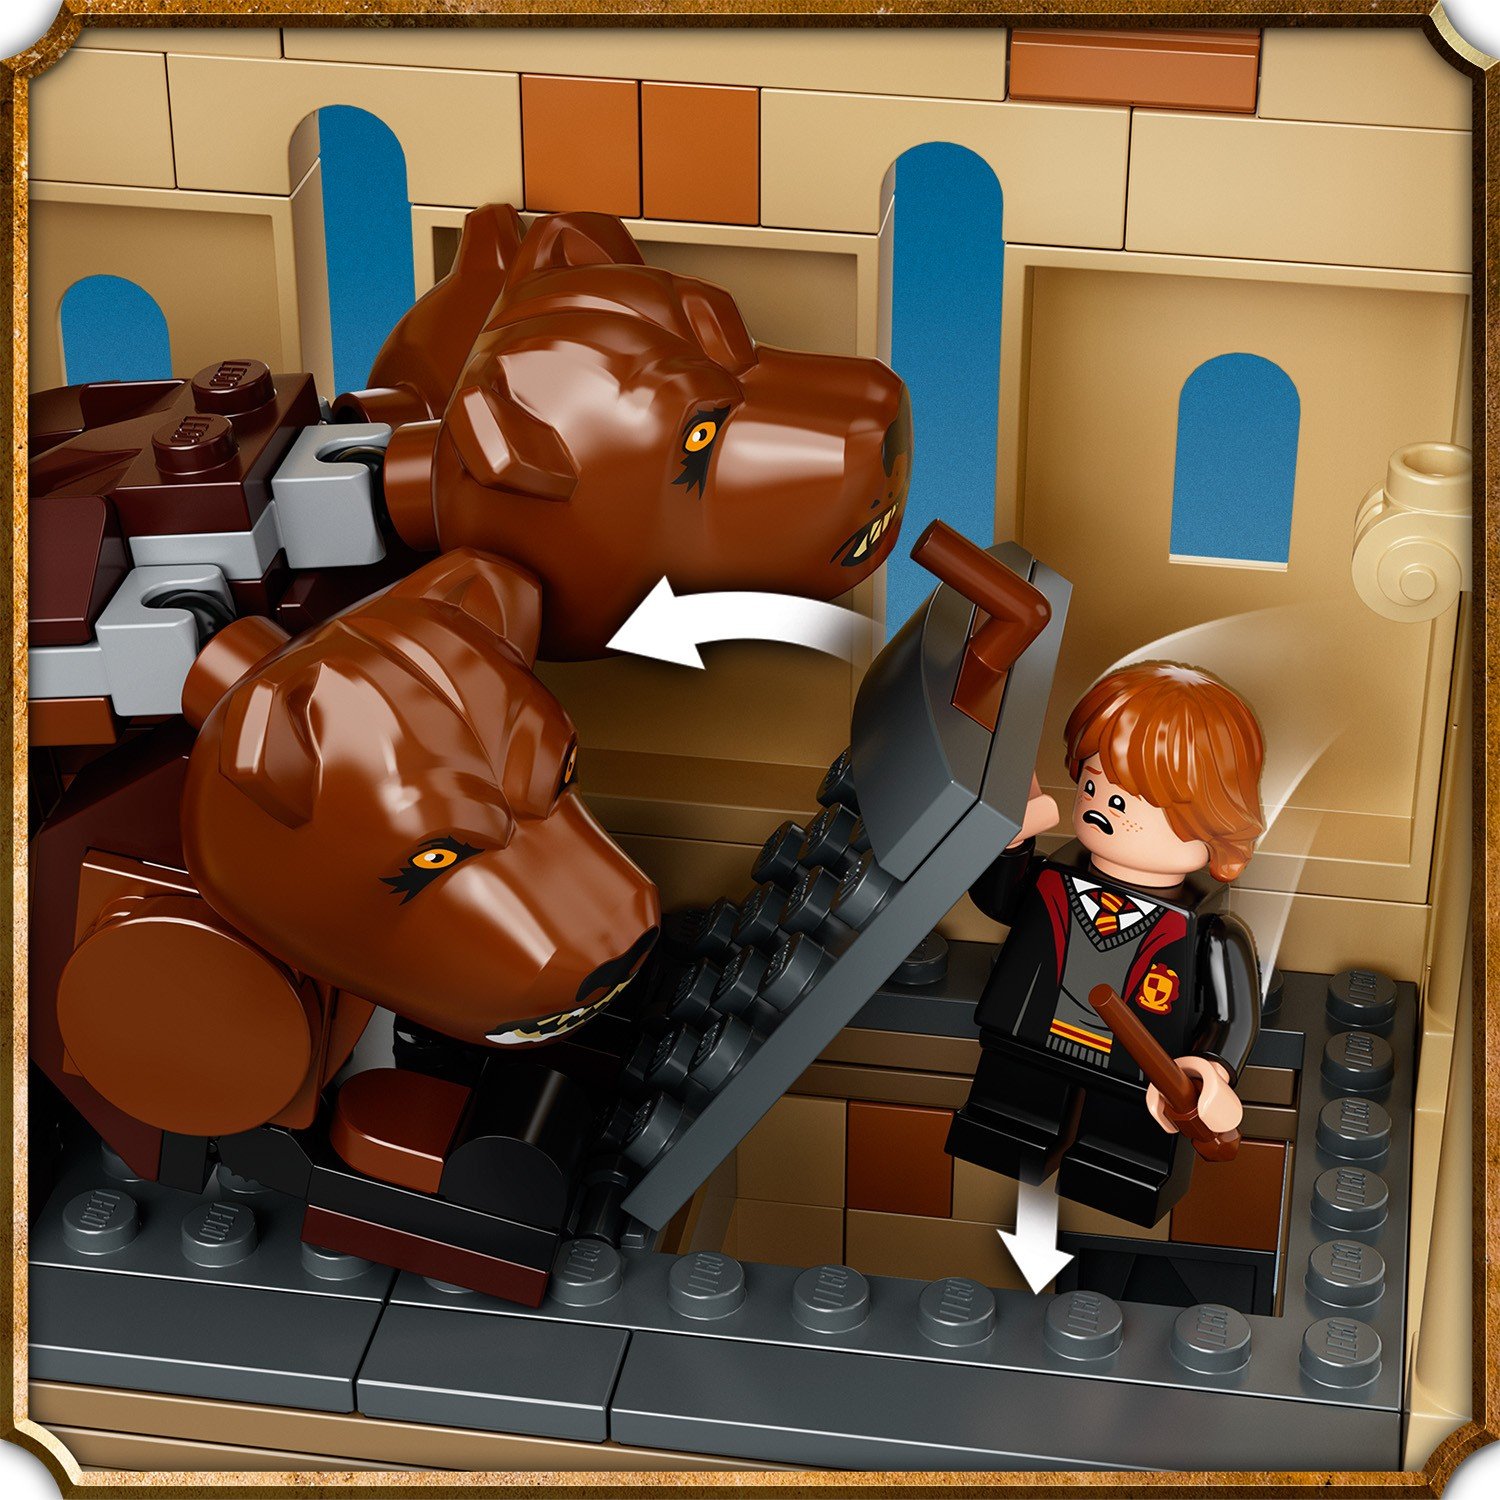 Lego Harry Potter 76387 Хогвартс: пушистая встреча